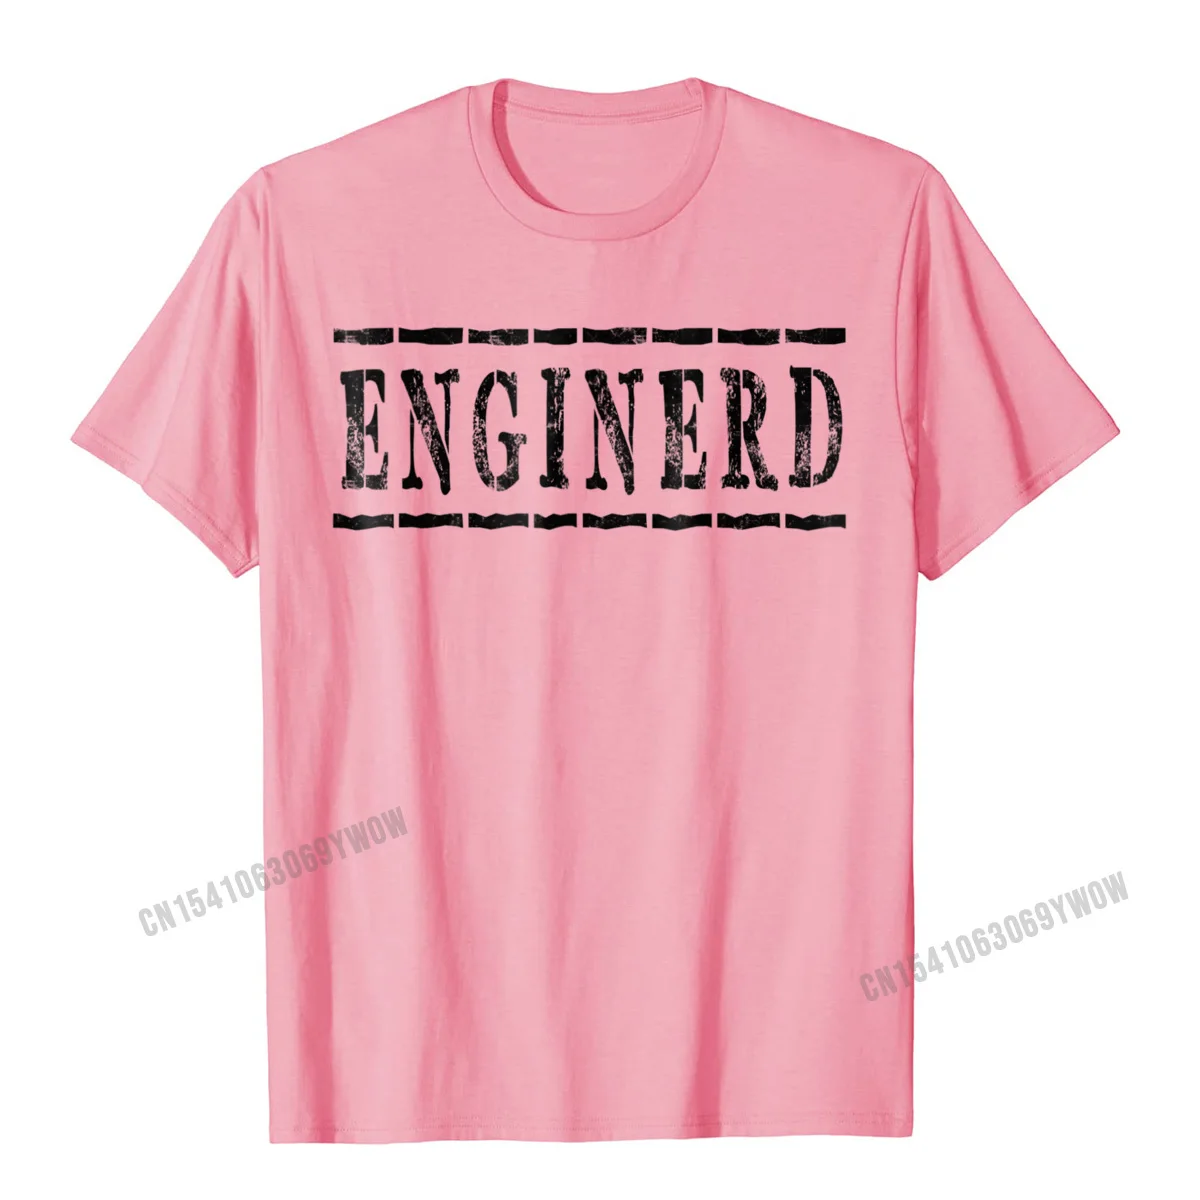 comfortable Family T-shirts Prevailing Summer Autumn Short Sleeve O-Neck Tops T Shirt Cotton Men Personalized T-Shirt Enginerd Engineers Engineering T-shirt Men Women__813 pink